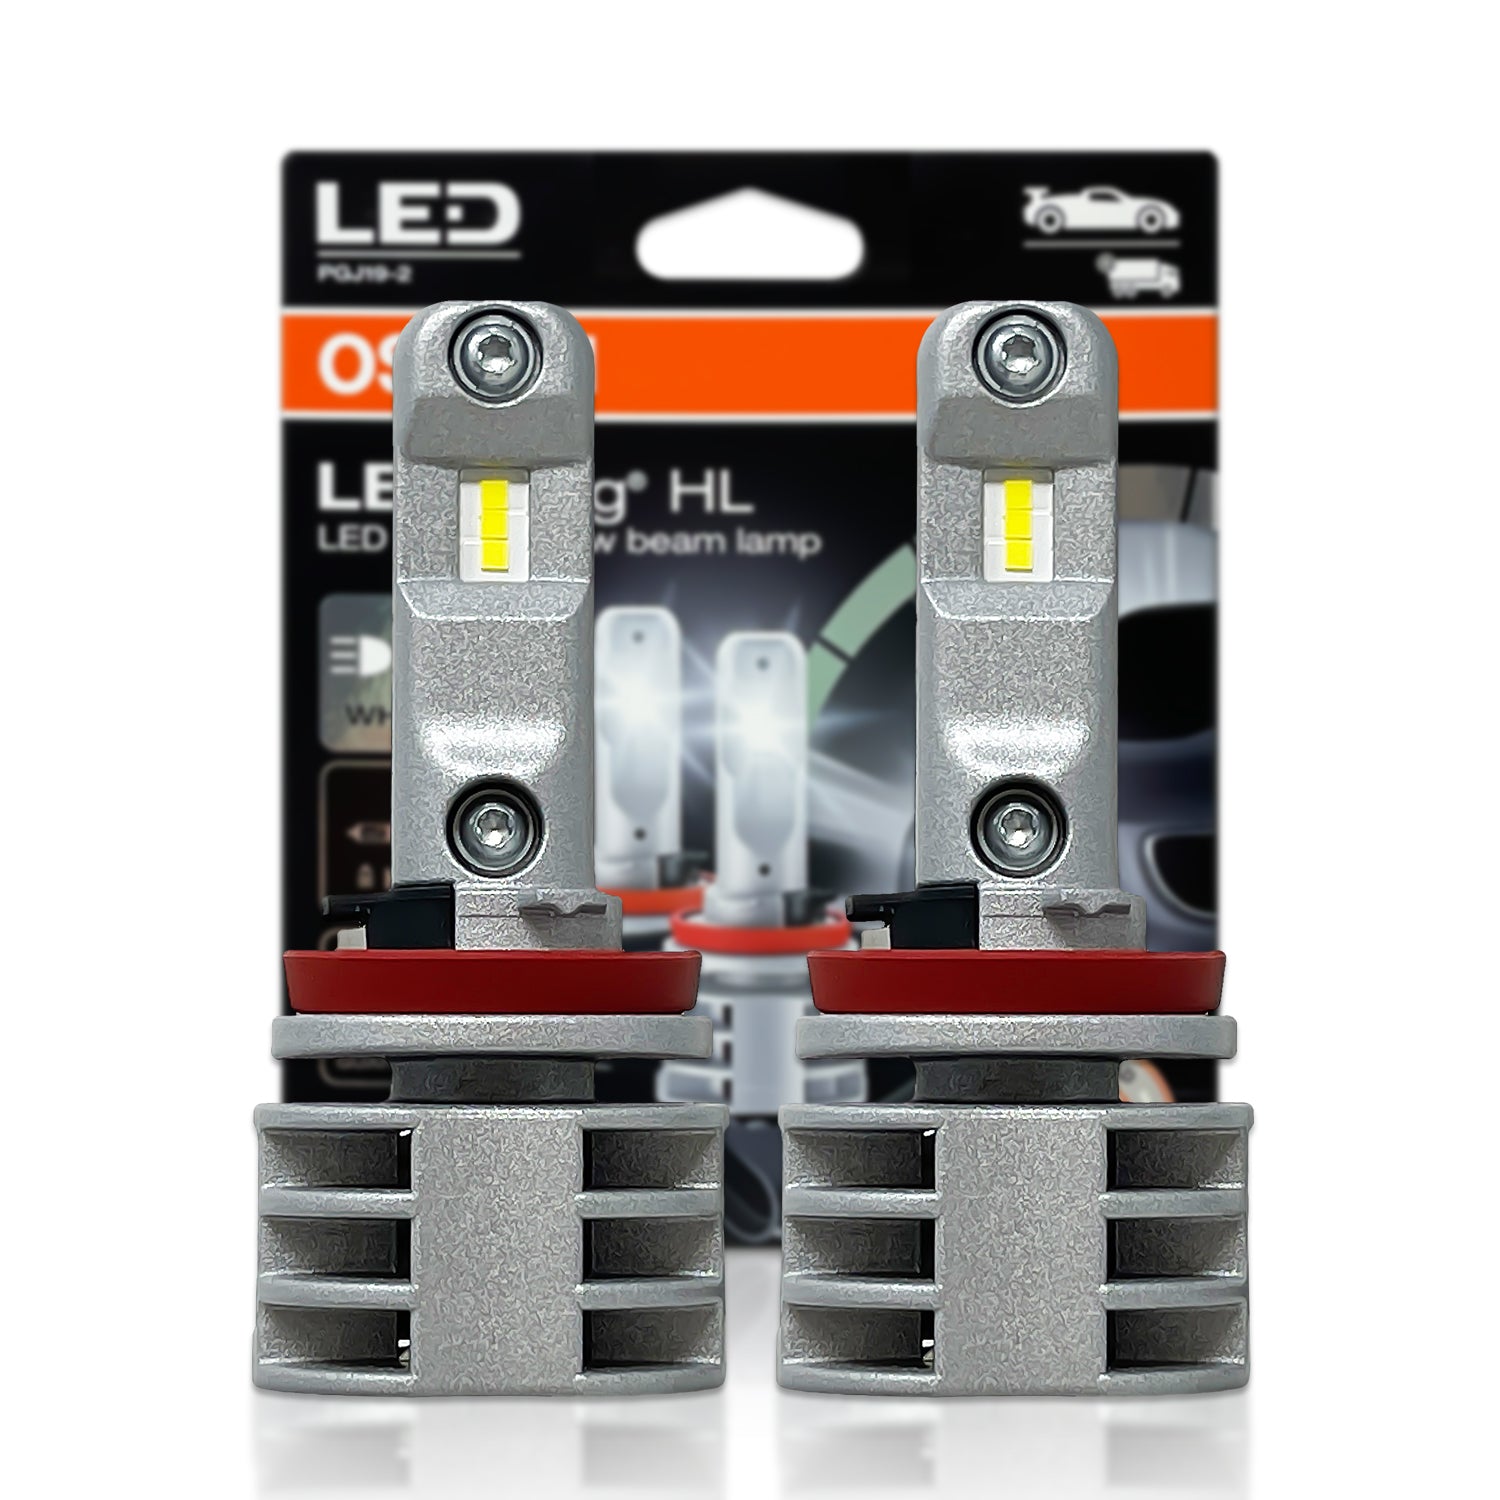 LED bulb OSRAM LEDriving HL BRIGHT H13